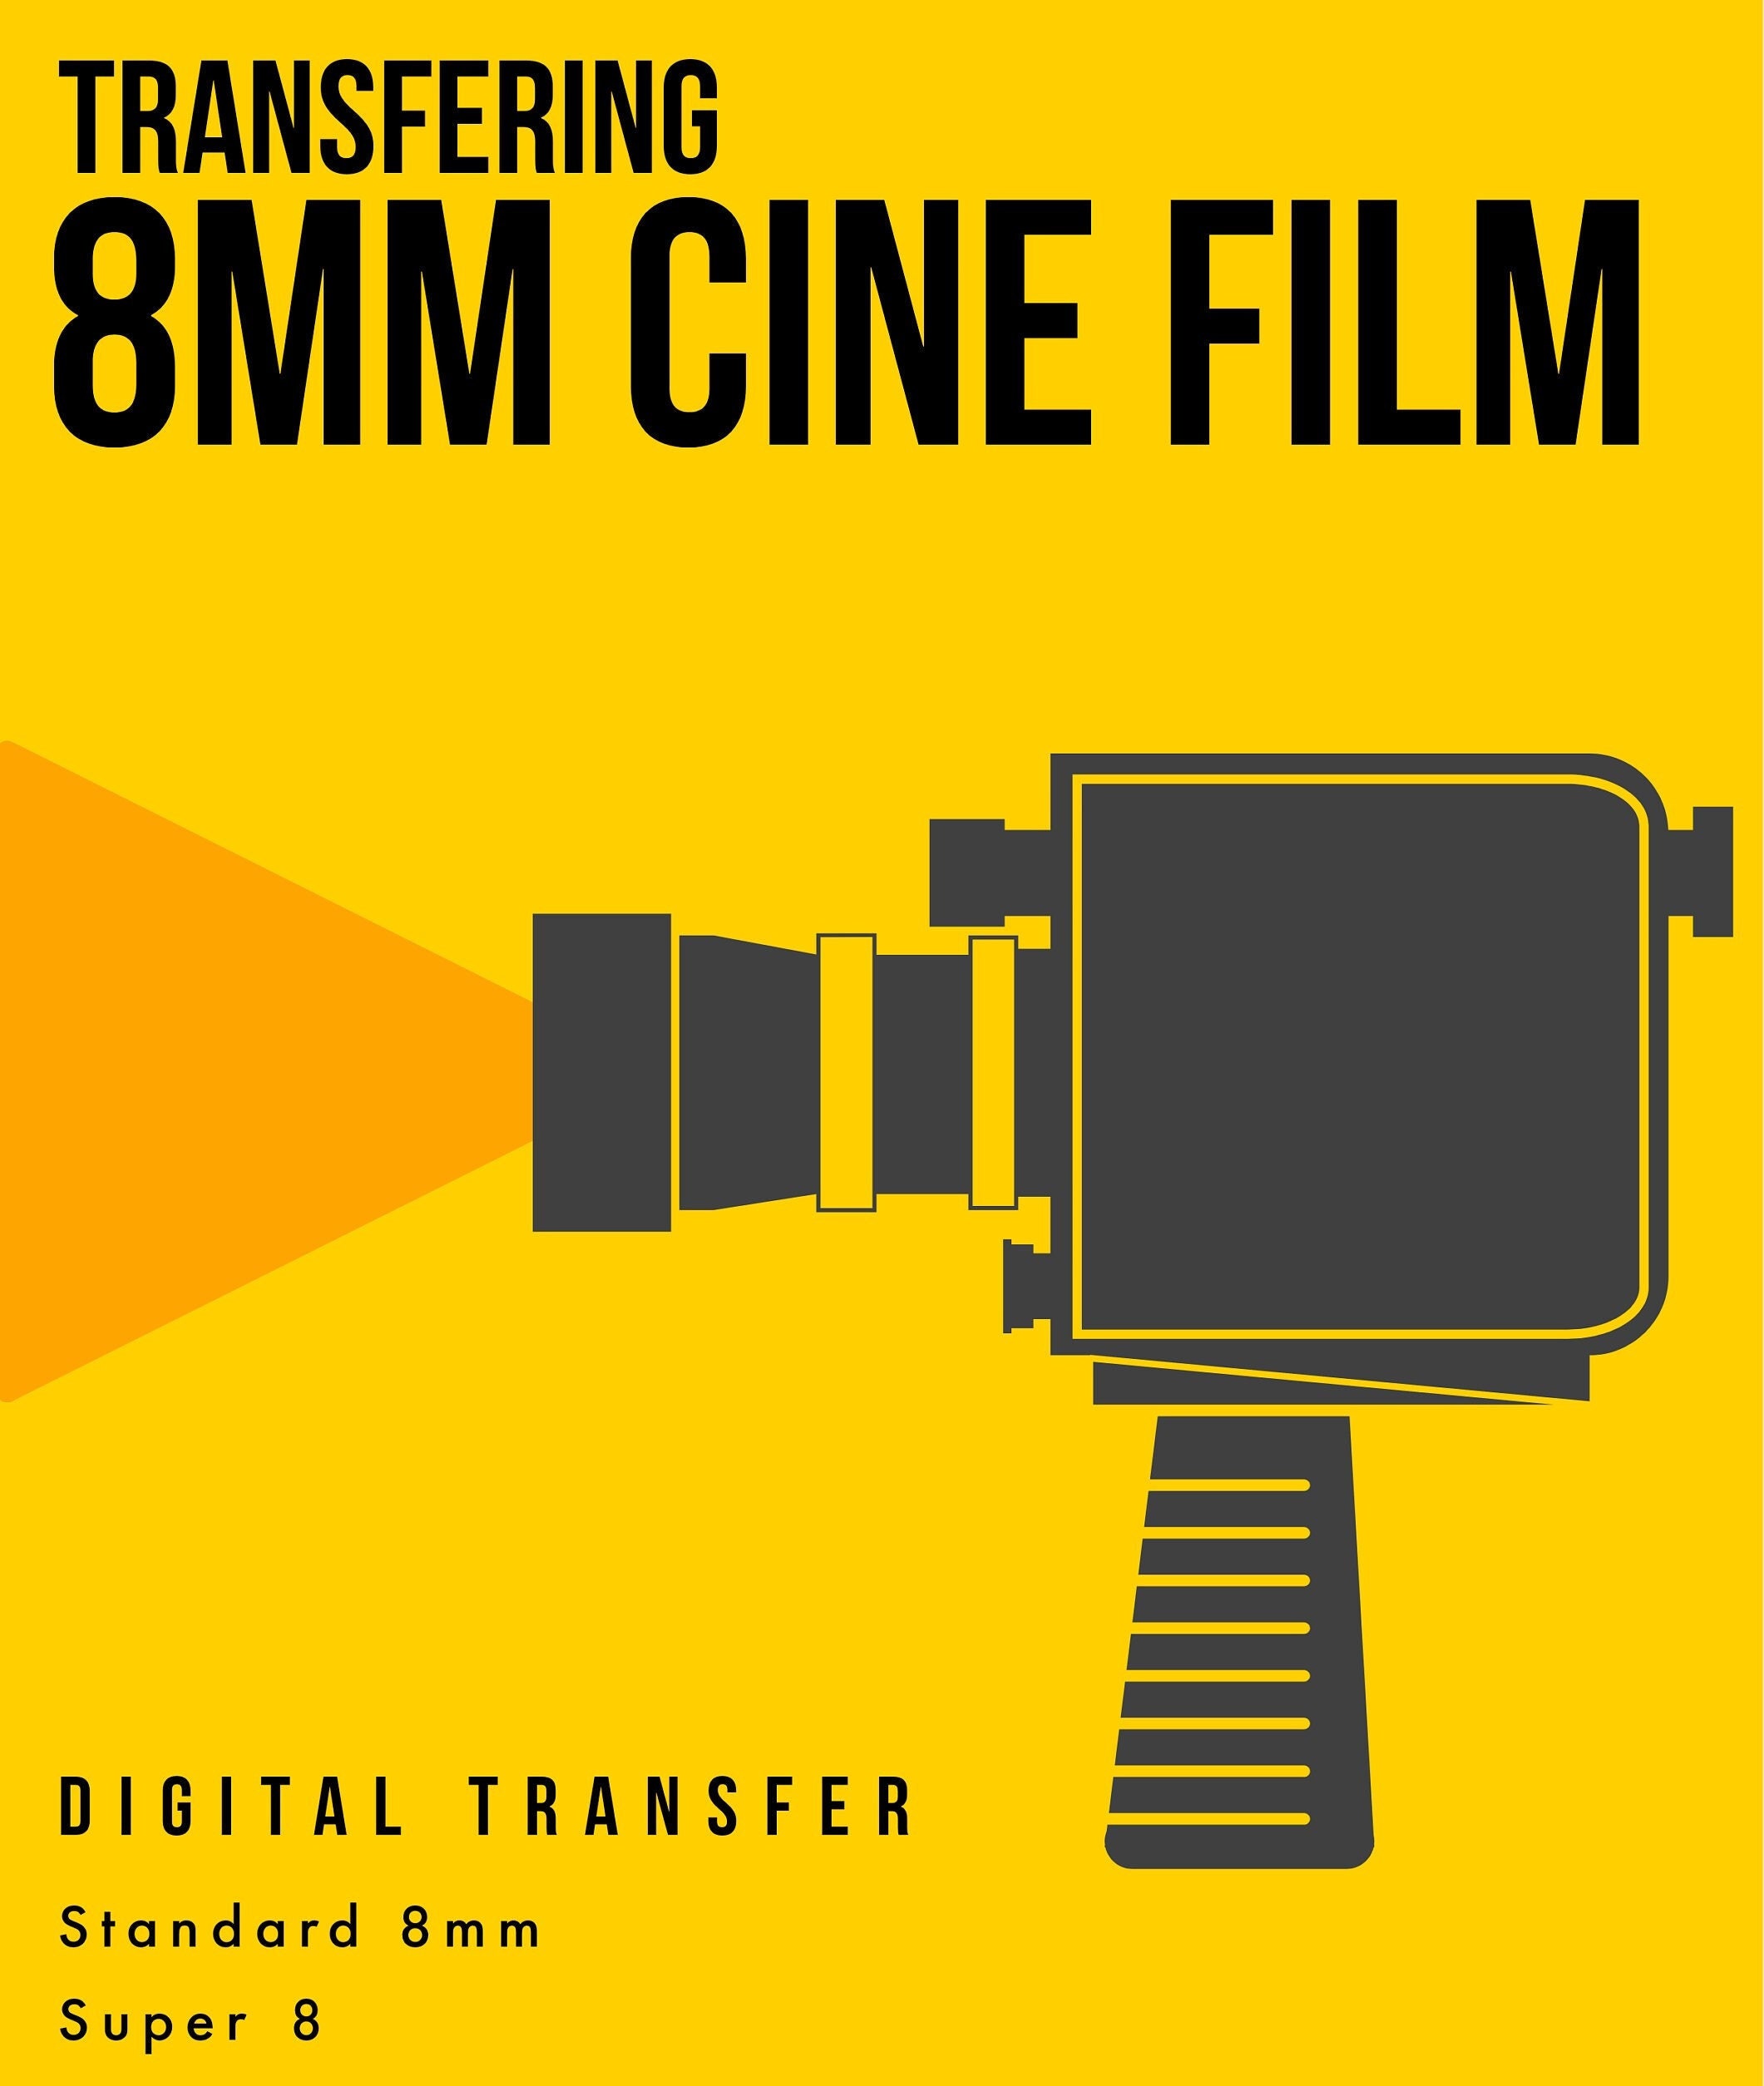 8mm Film to Dvd 